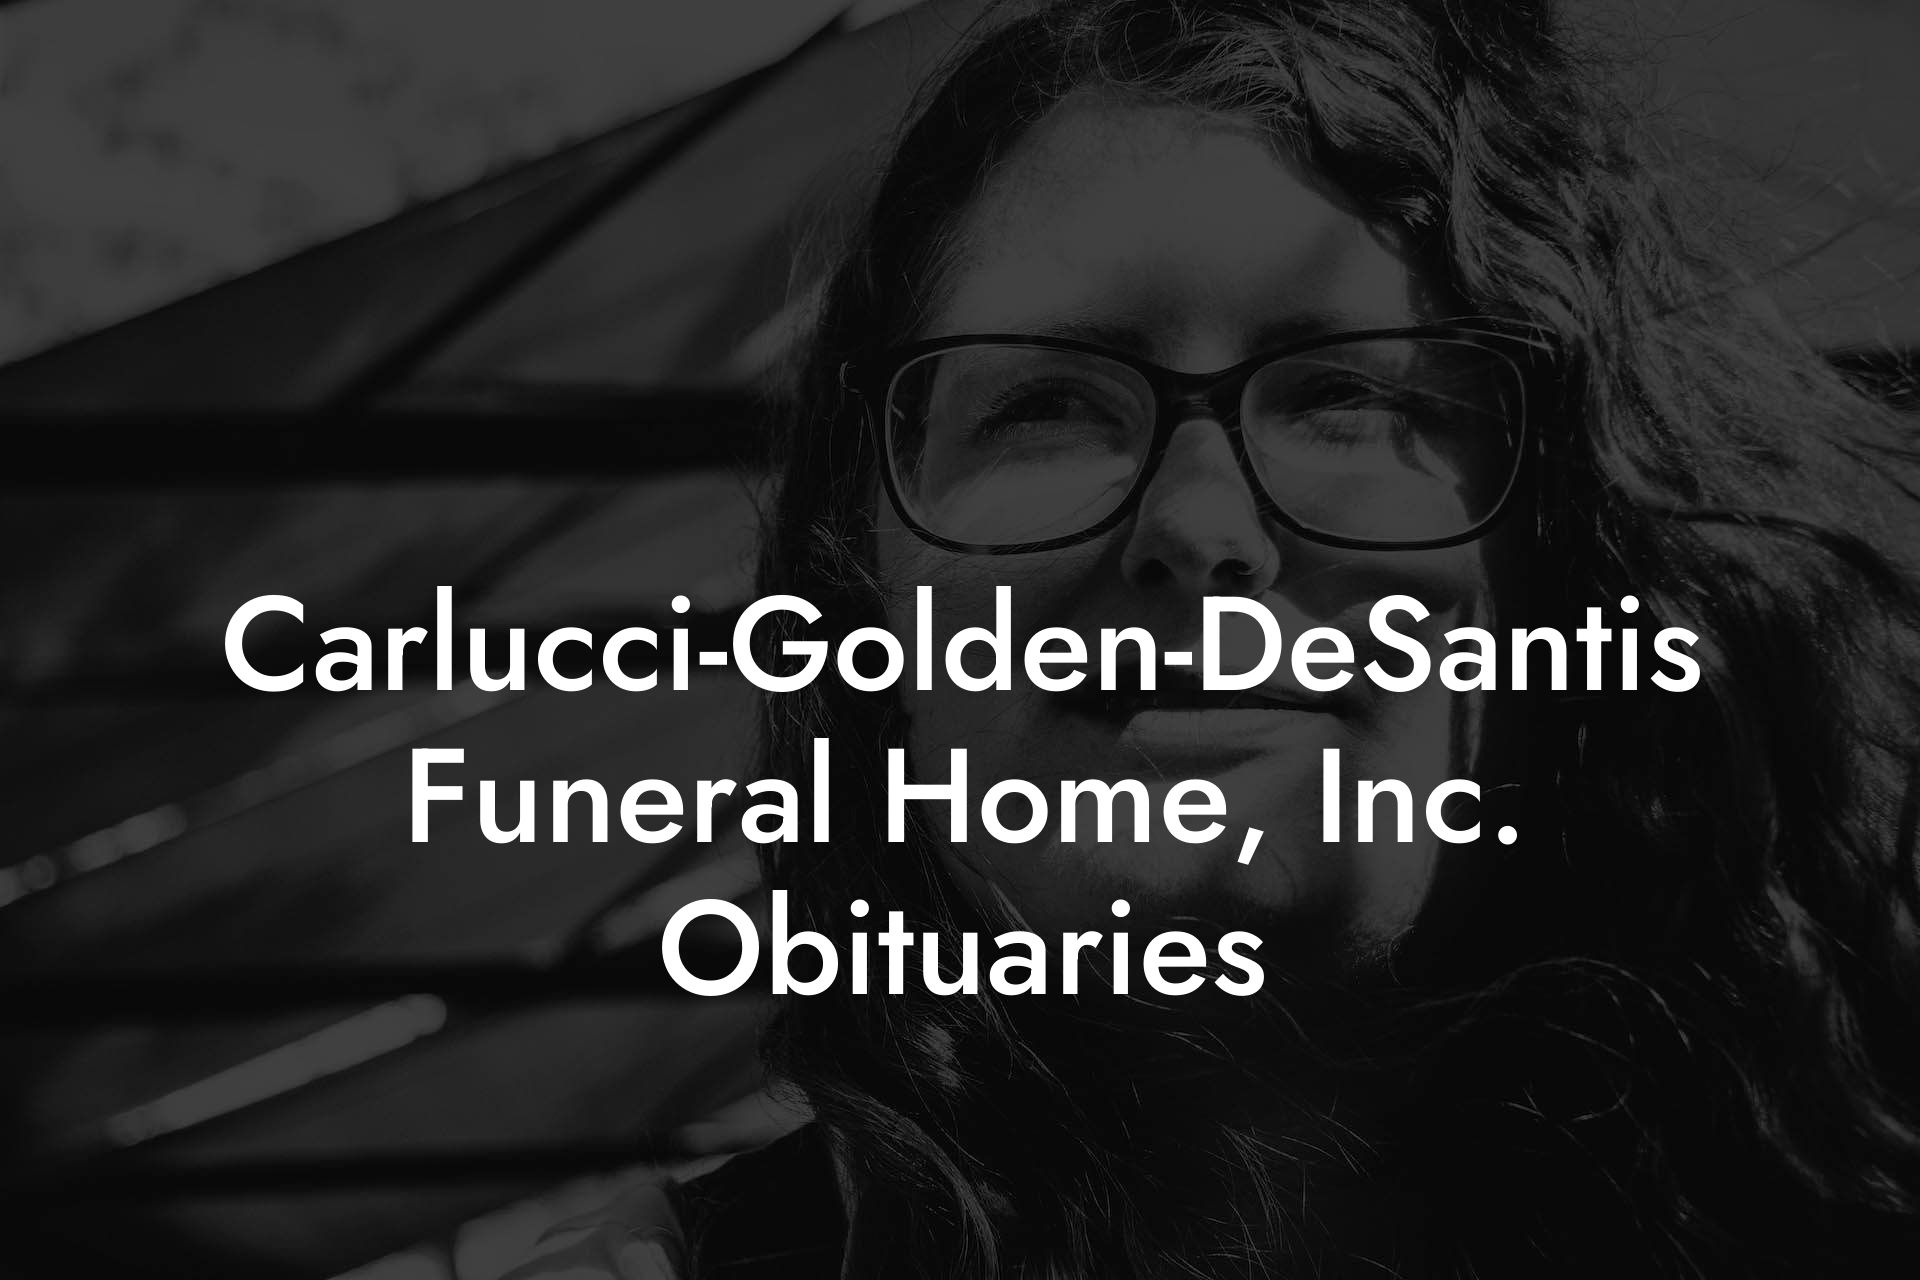 Carlucci-Golden-DeSantis Funeral Home, Inc. Obituaries